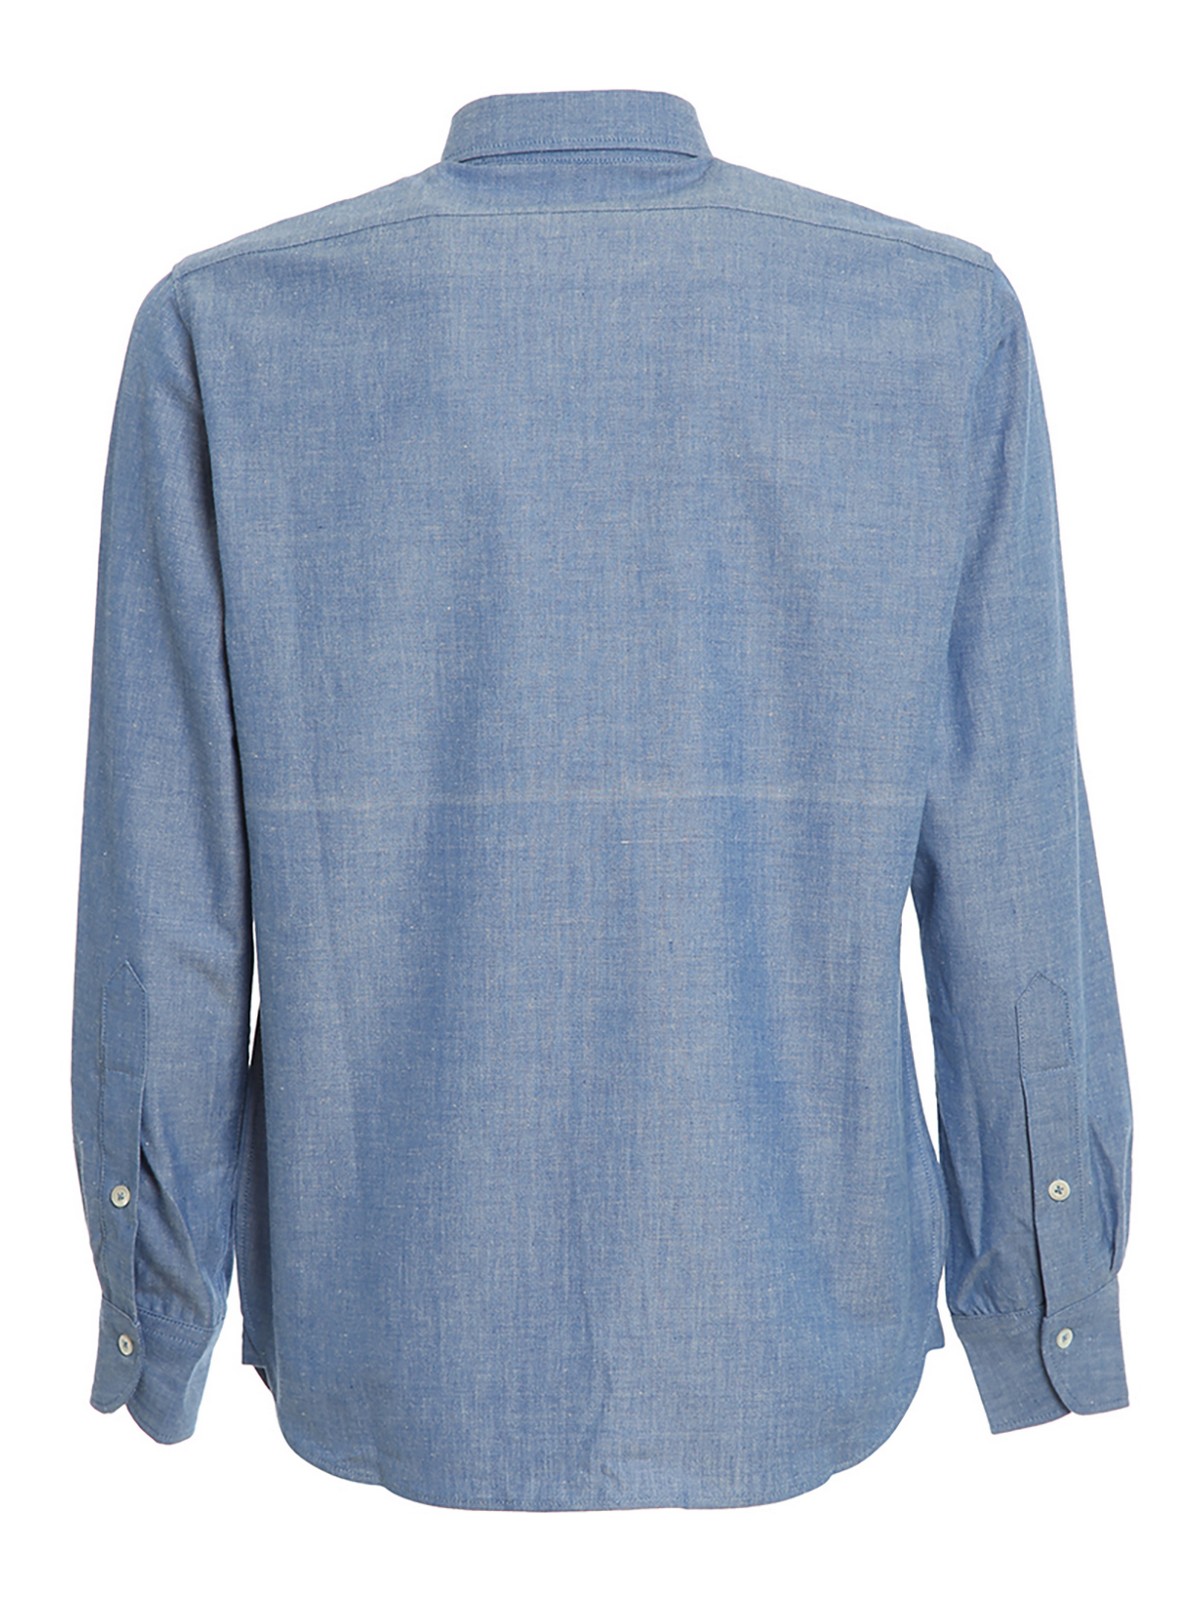 Shirts Gm 77 - Cotton shirt - C13T116CHAMBRY | Shop online at iKRIX